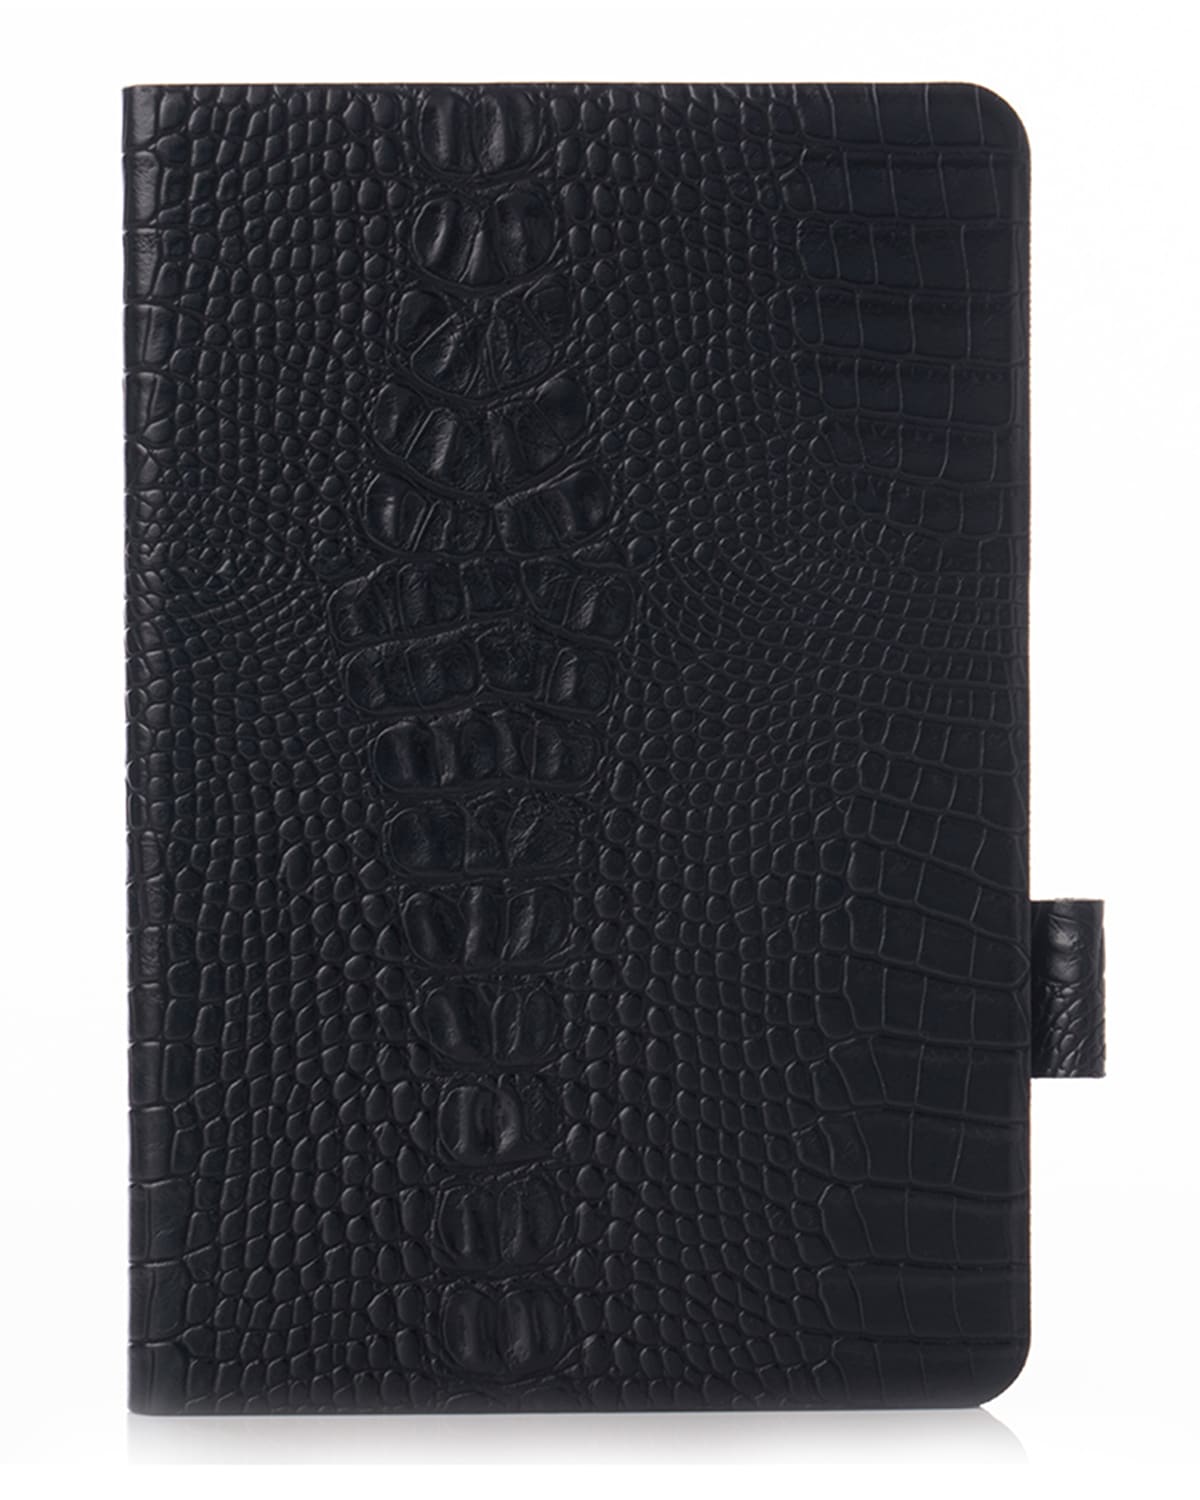 Faux Crocodile iPad Mini Case - 4th & 5th Generation